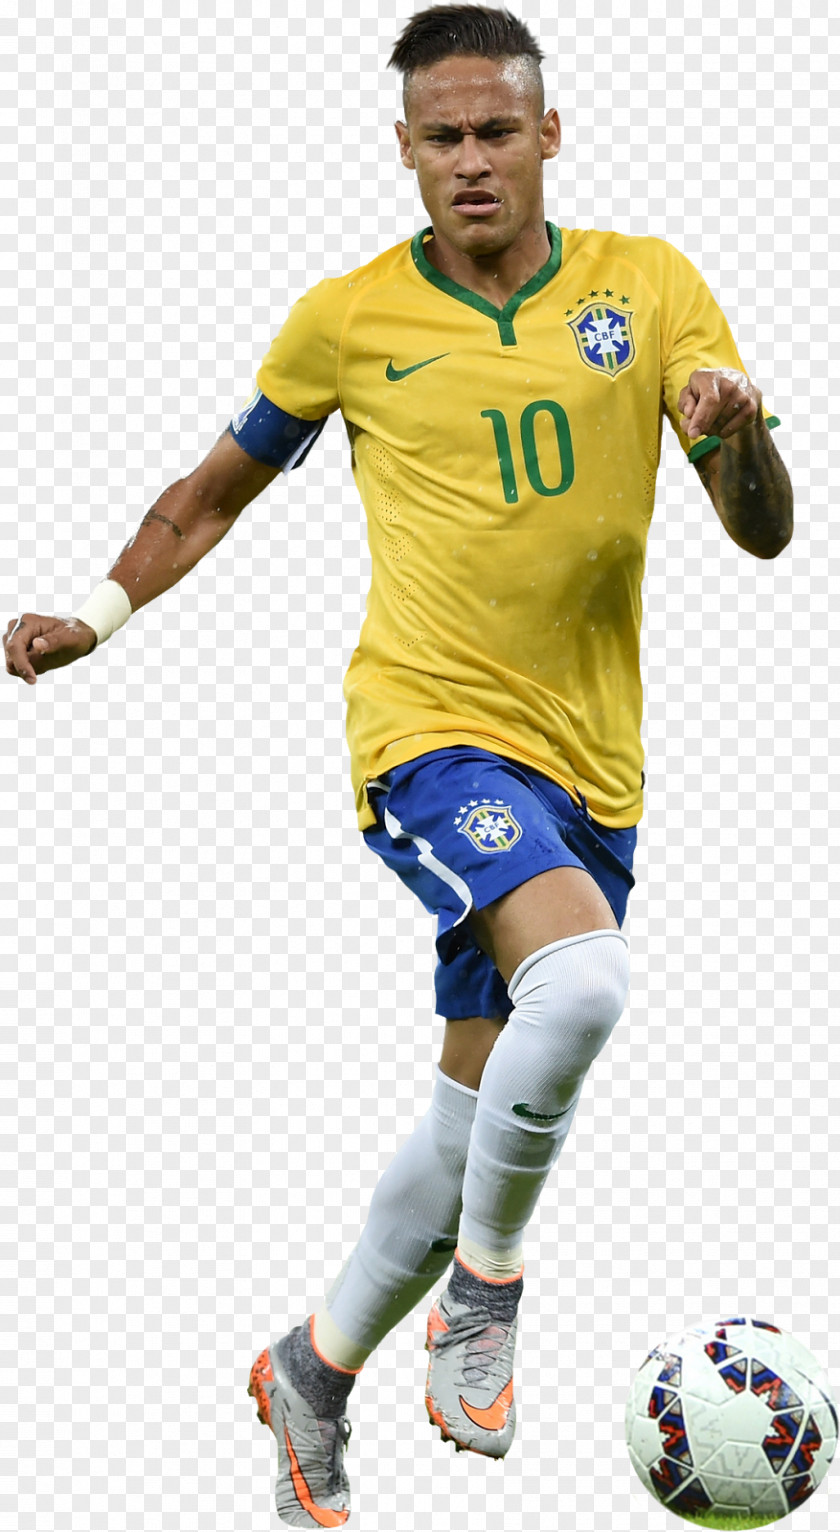 Neymar Football Render Athlete Brazil National Team FC Barcelona 2014 FIFA World Cup PNG